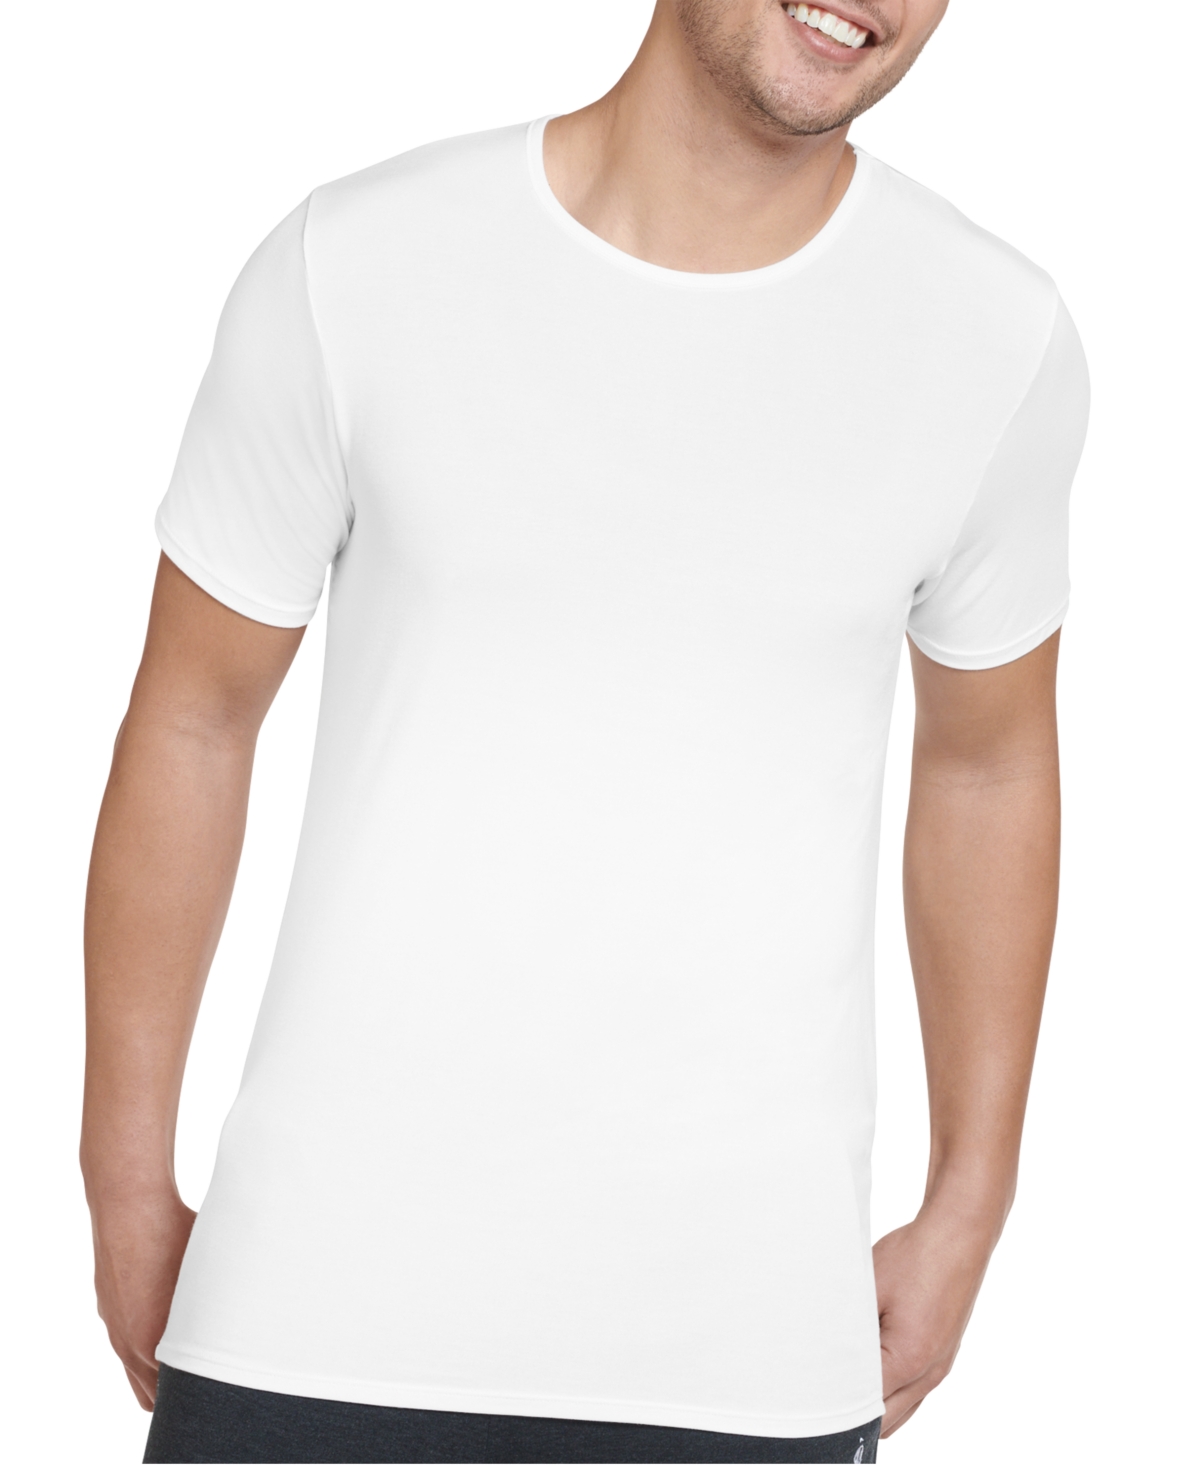 Men's Active Ultra-Soft T-Shirt - White